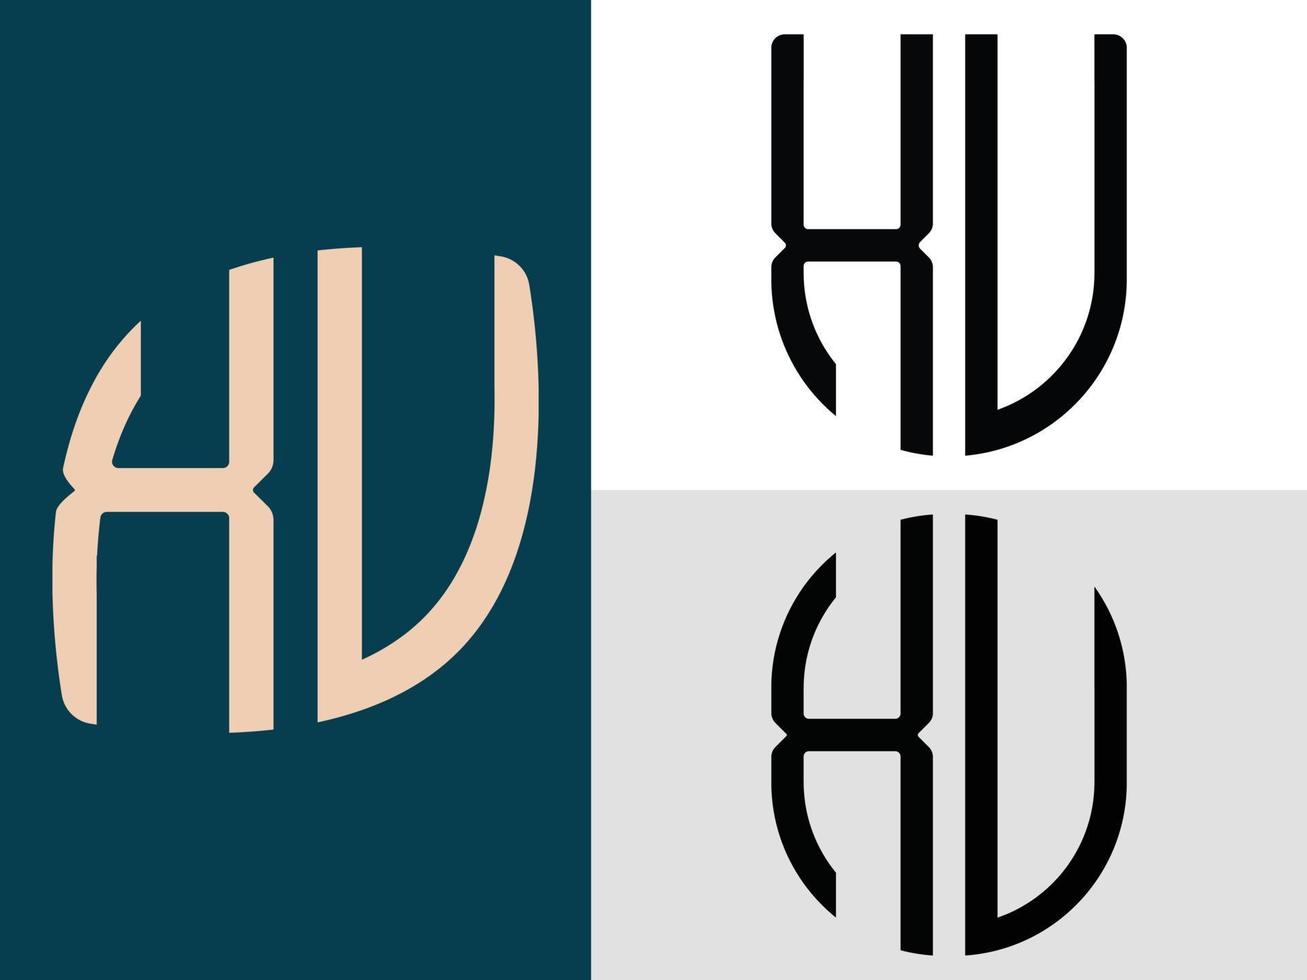 kreative anfangsbuchstaben xu logo designs paket. vektor